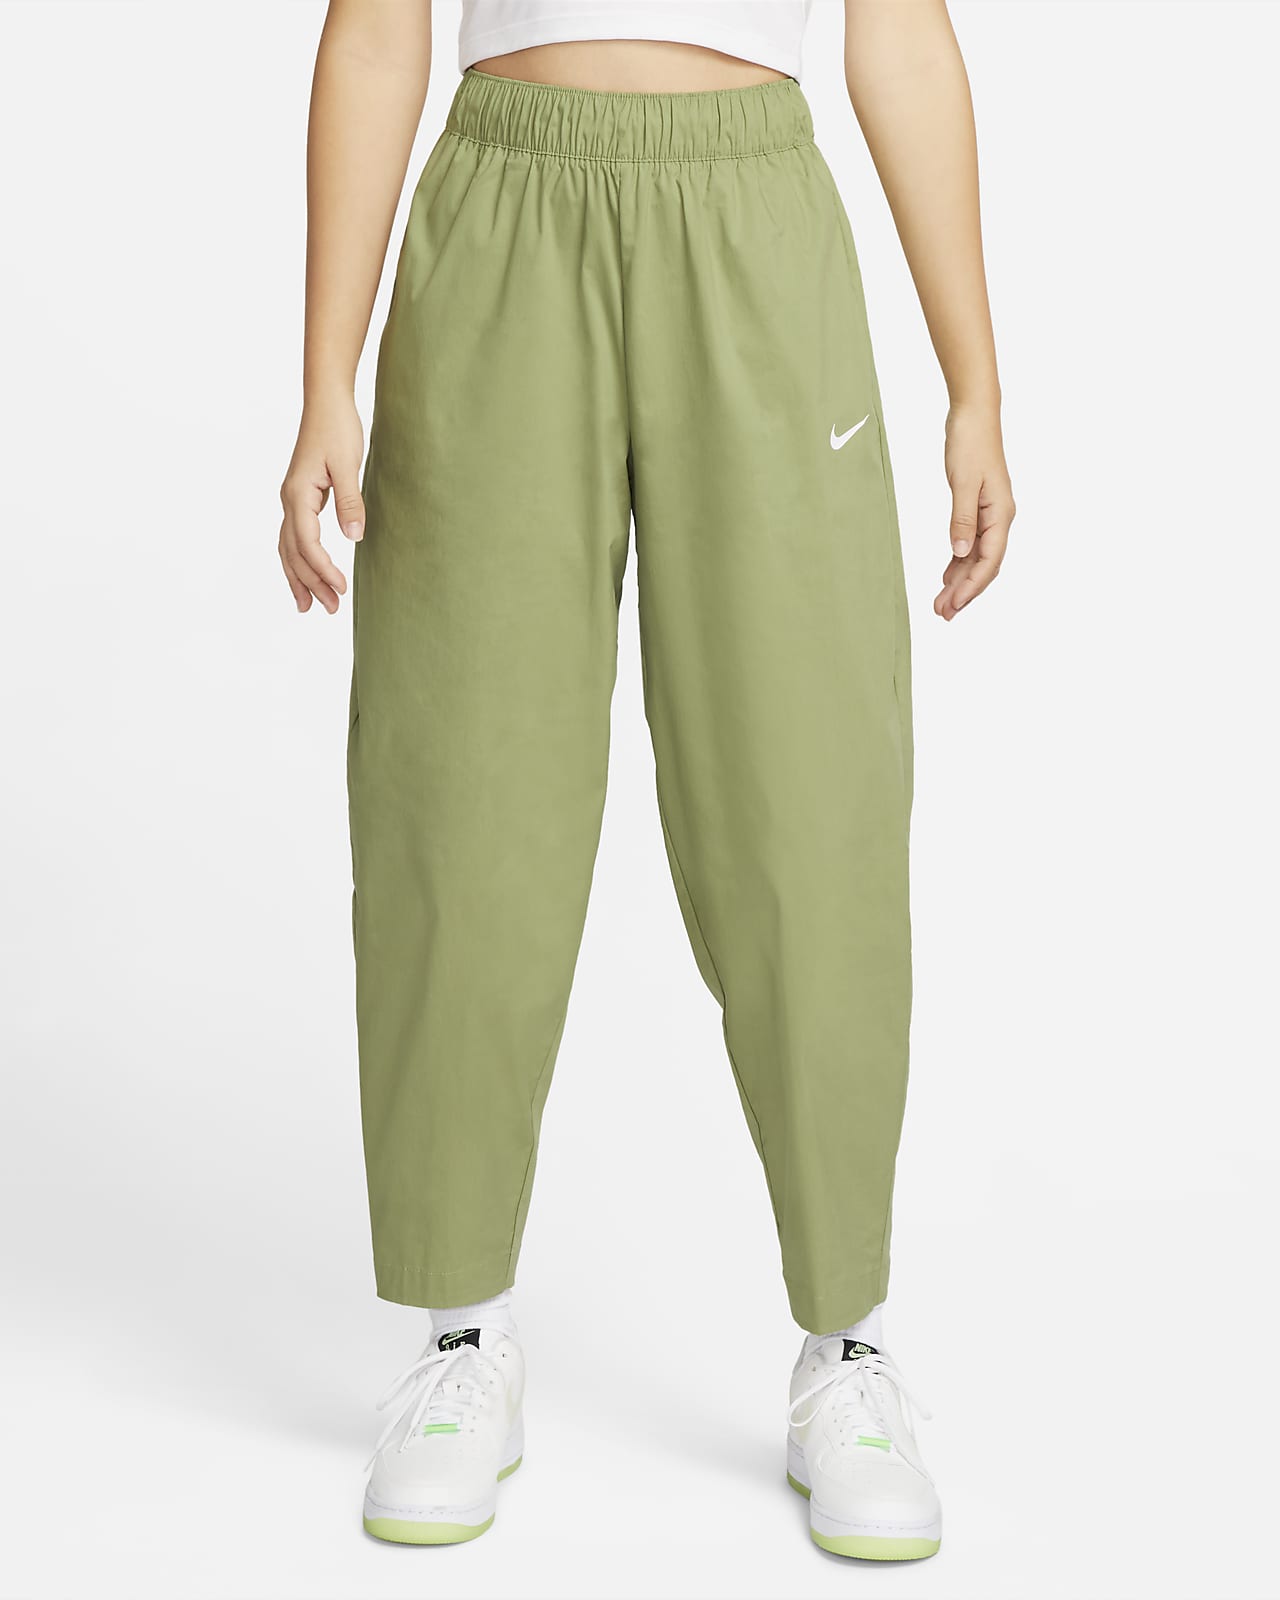 Cosquillas Celebridad Poder Pants con curvas de tiro alto para mujer Nike Sportswear Essential. Nike.com